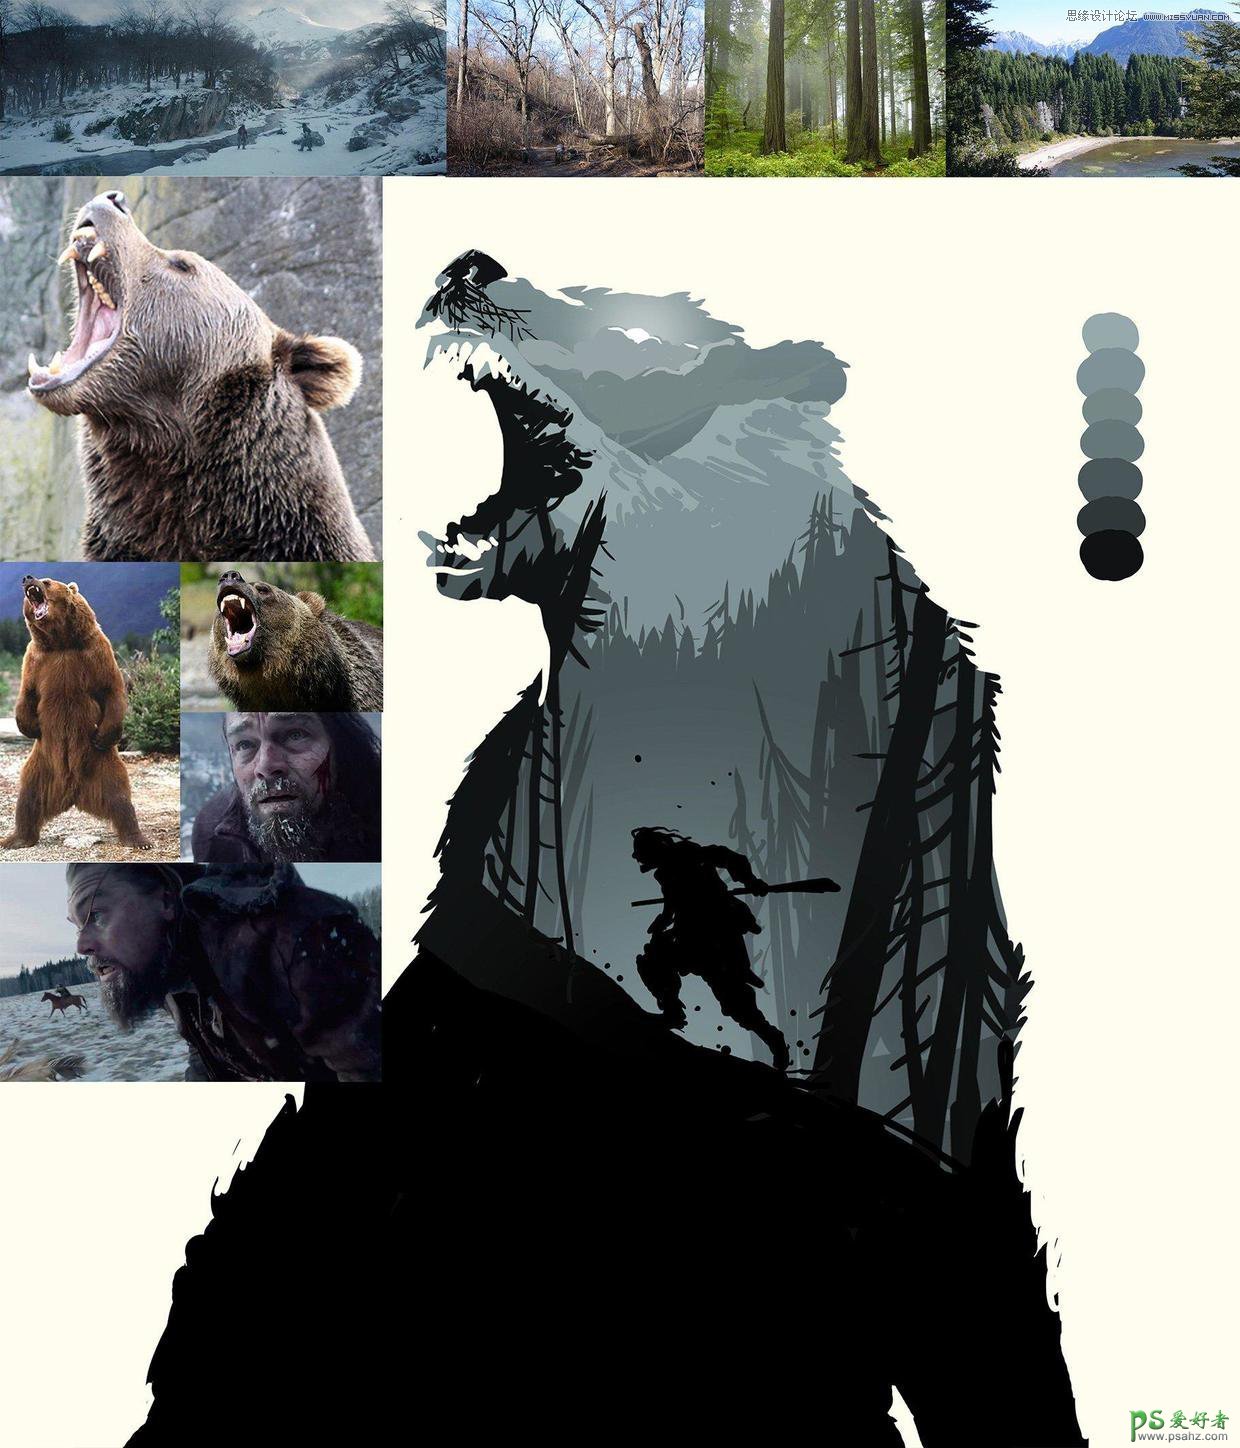 PS图片特效制作教程：设计二次曝光效果的电影海报图片《荒野猎人